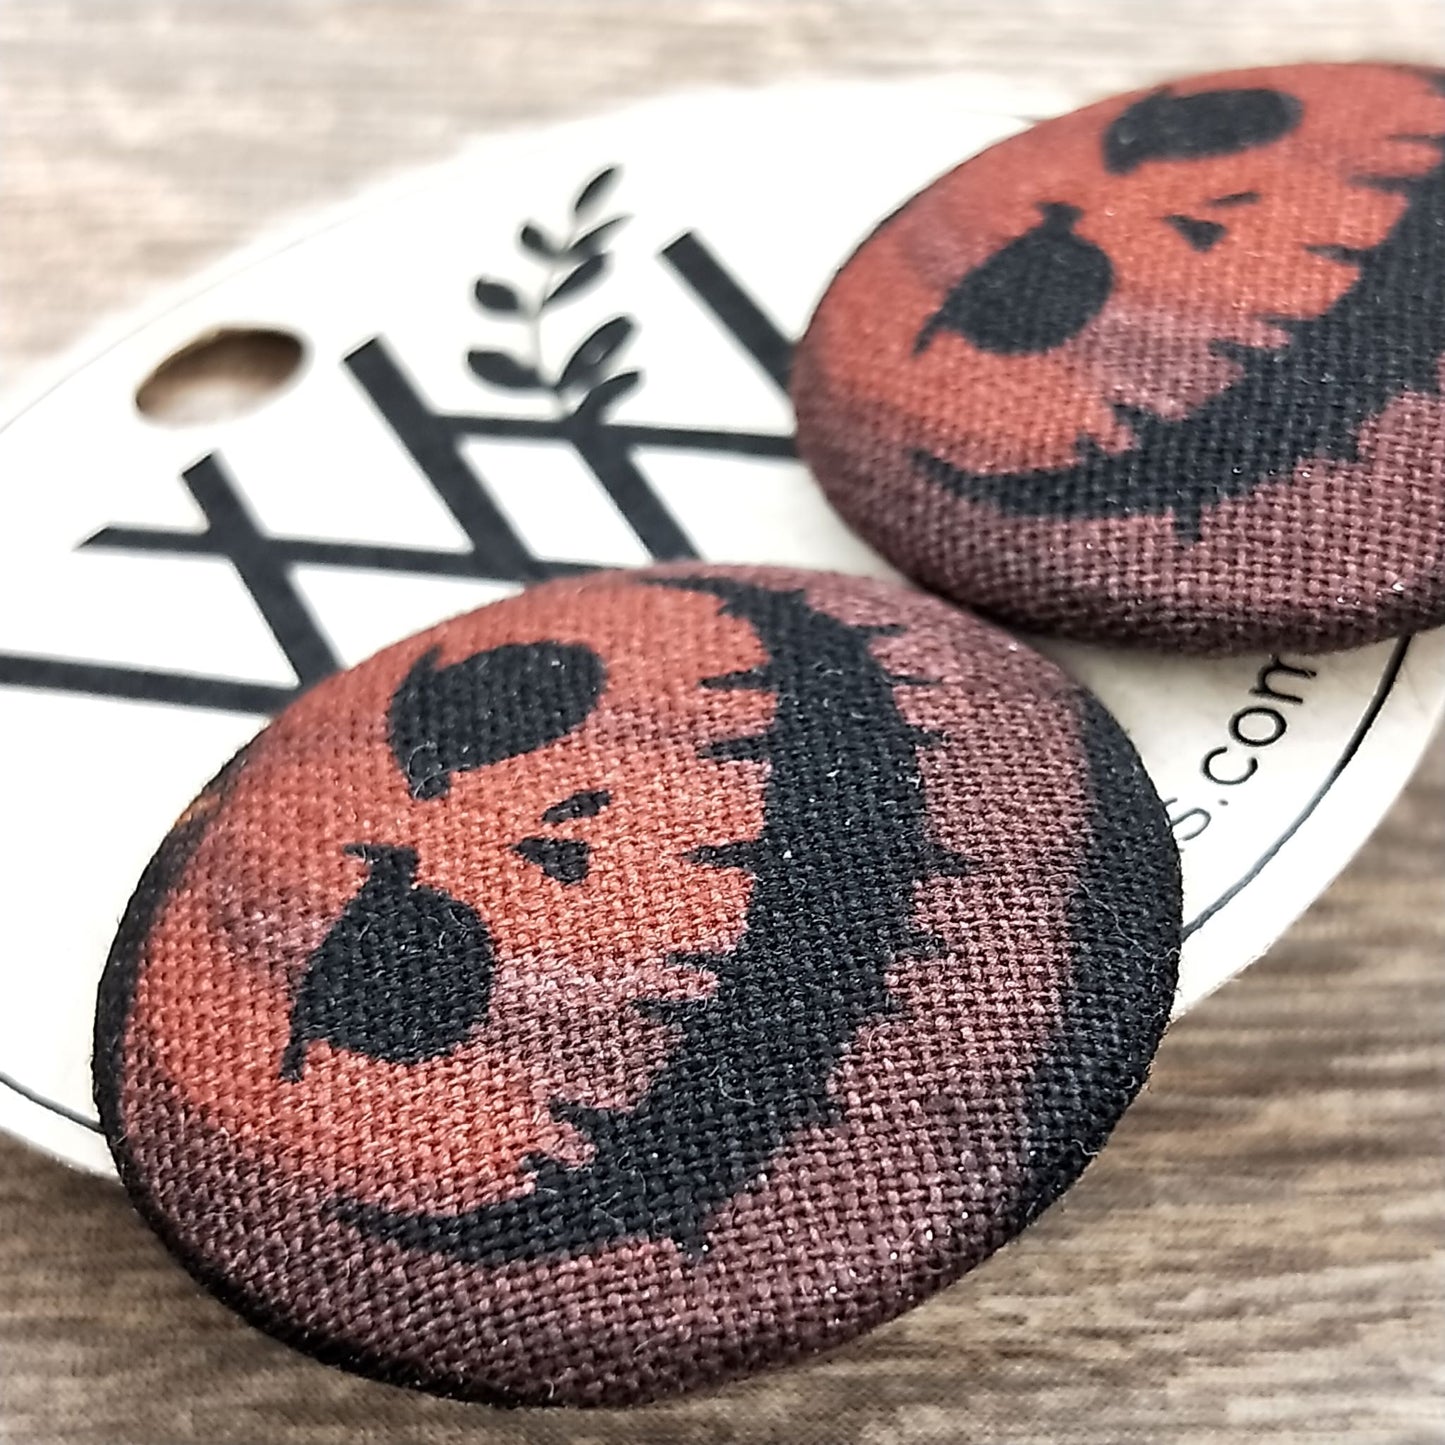 Wildears Fabric Covered Button Earrings Pumpkin Head 27mm